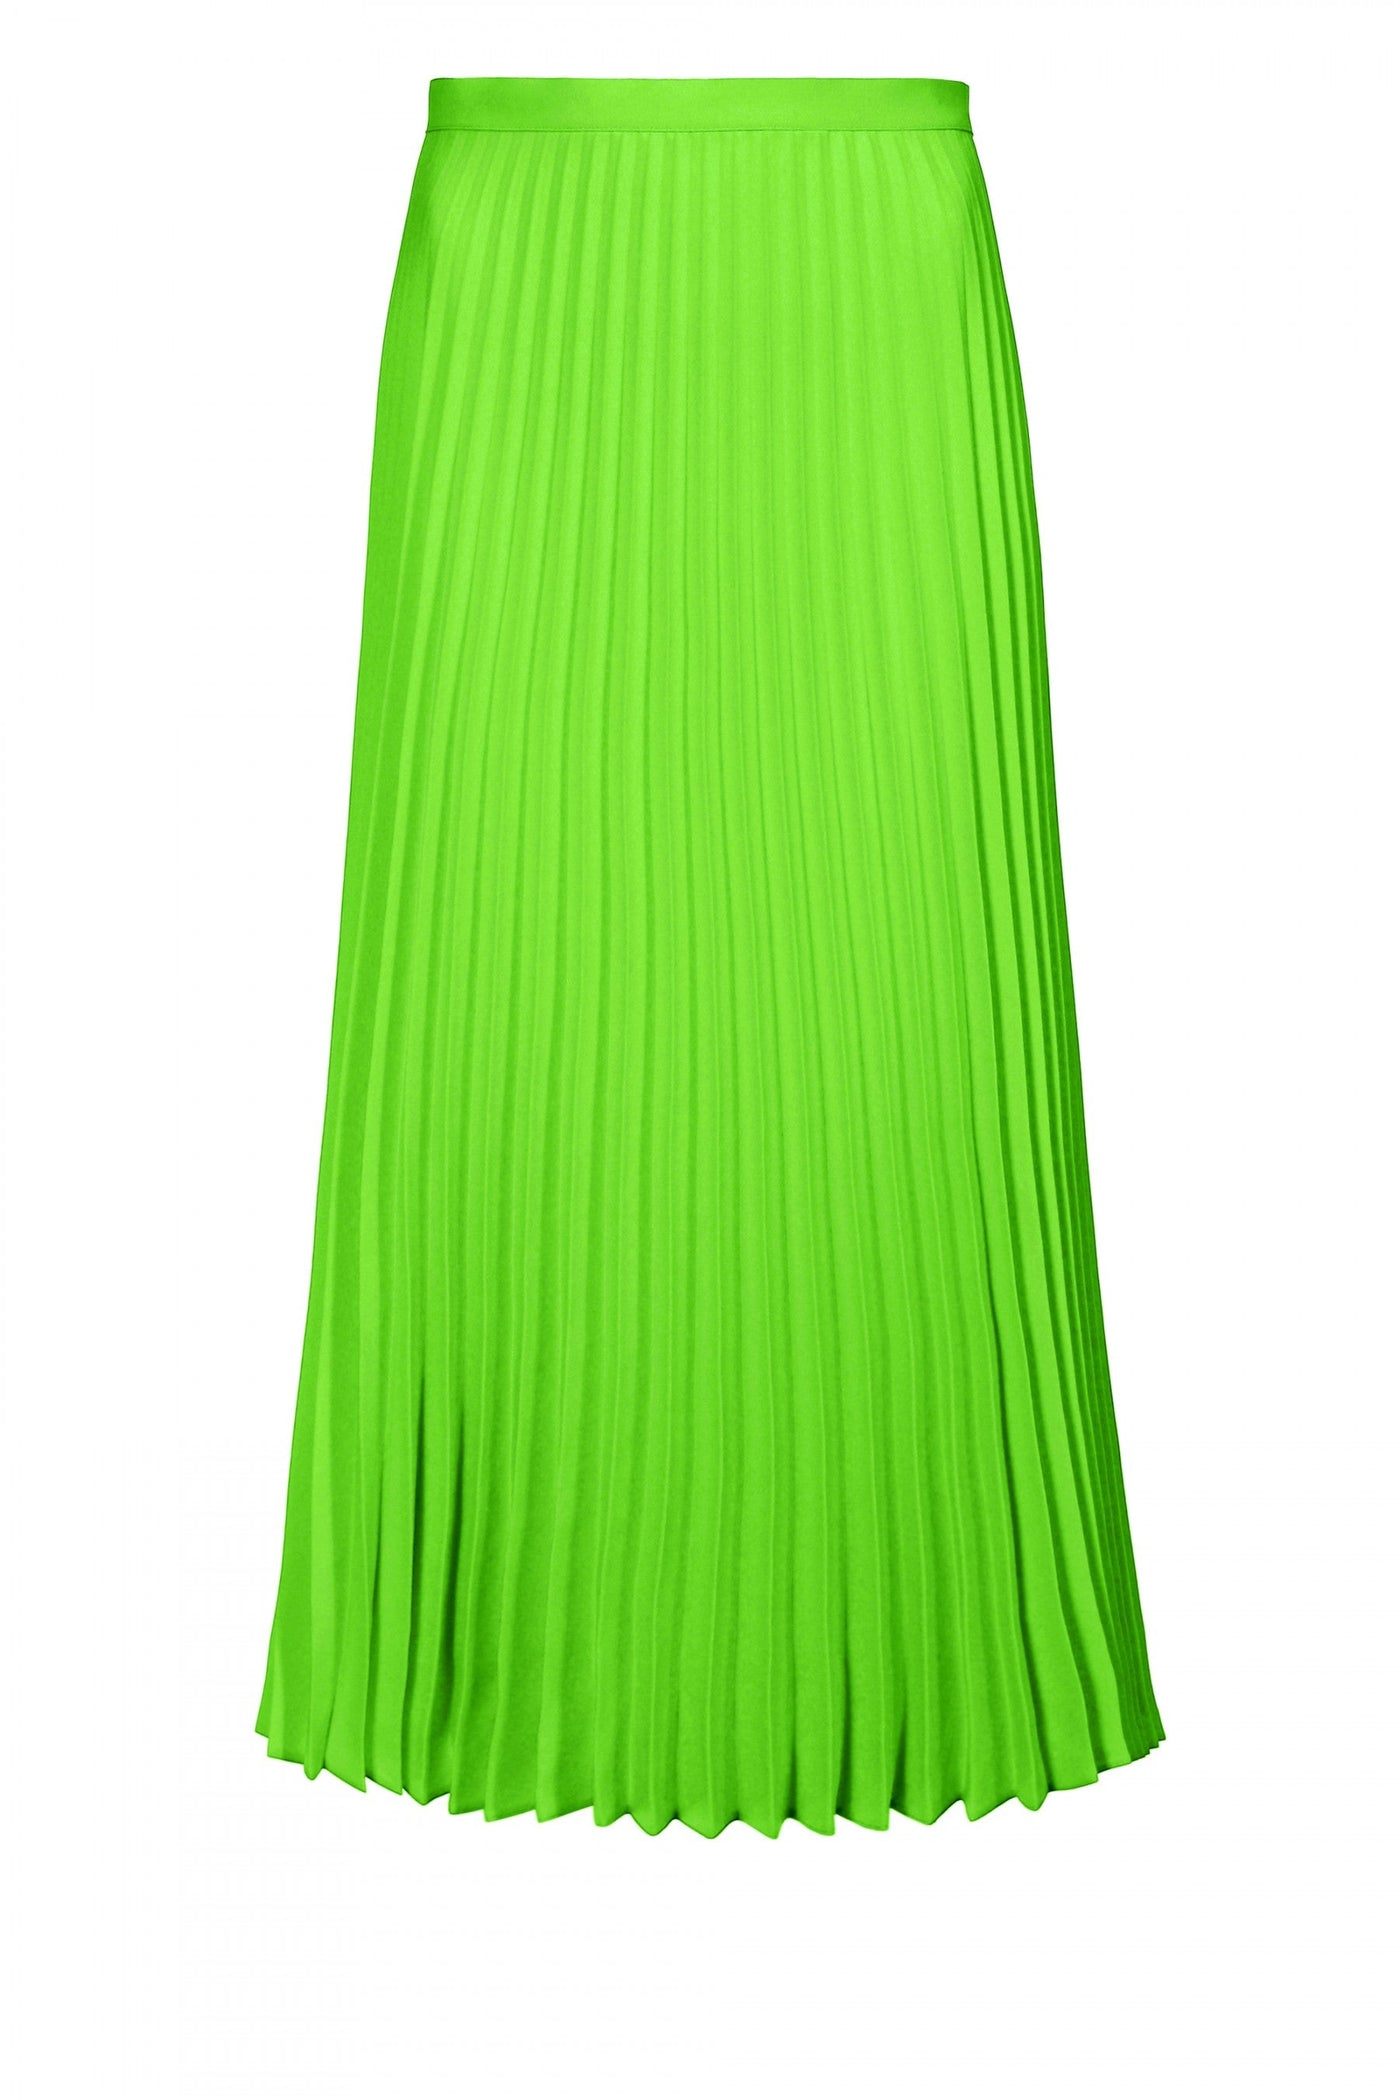 Elvira Green Flash Pleatted Midi Skirt